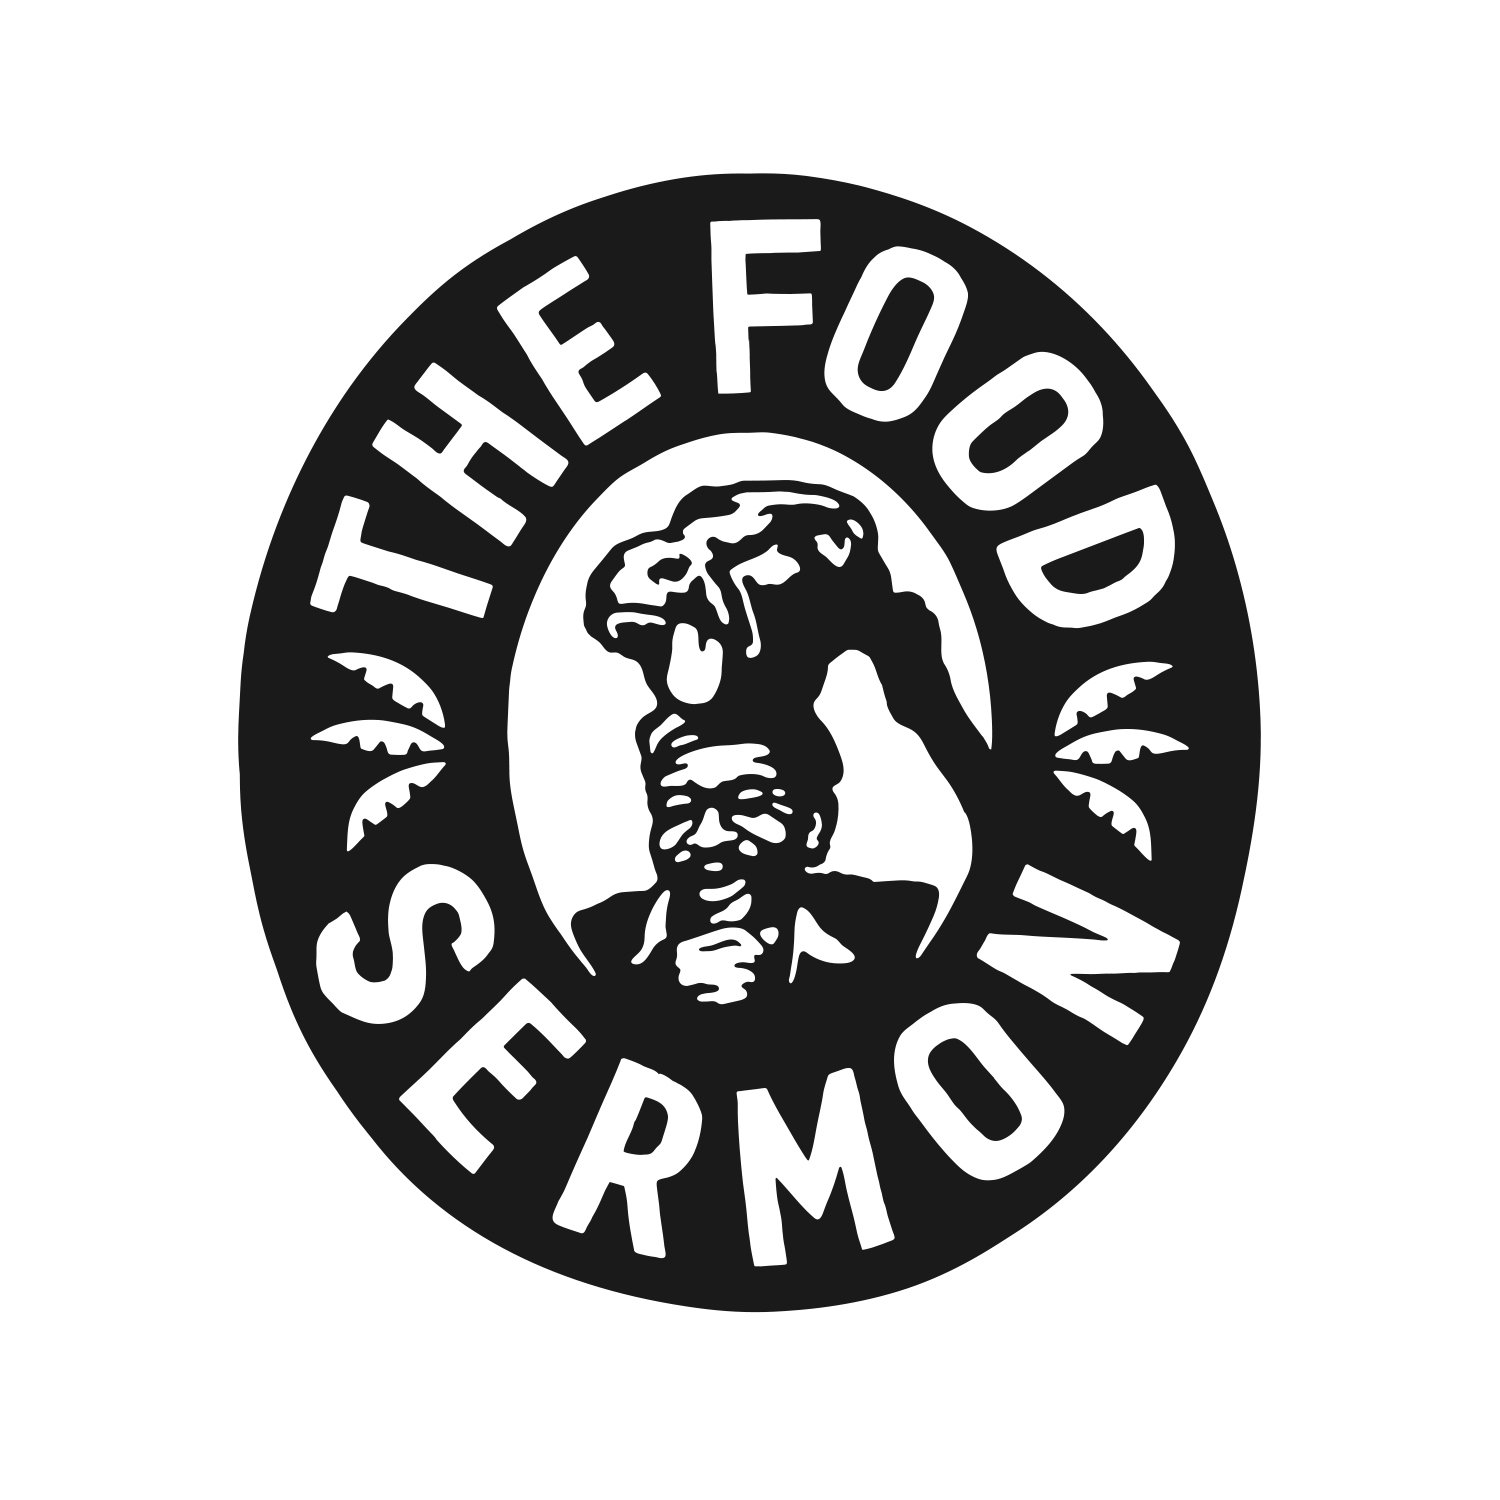 THE FOOD SERMON